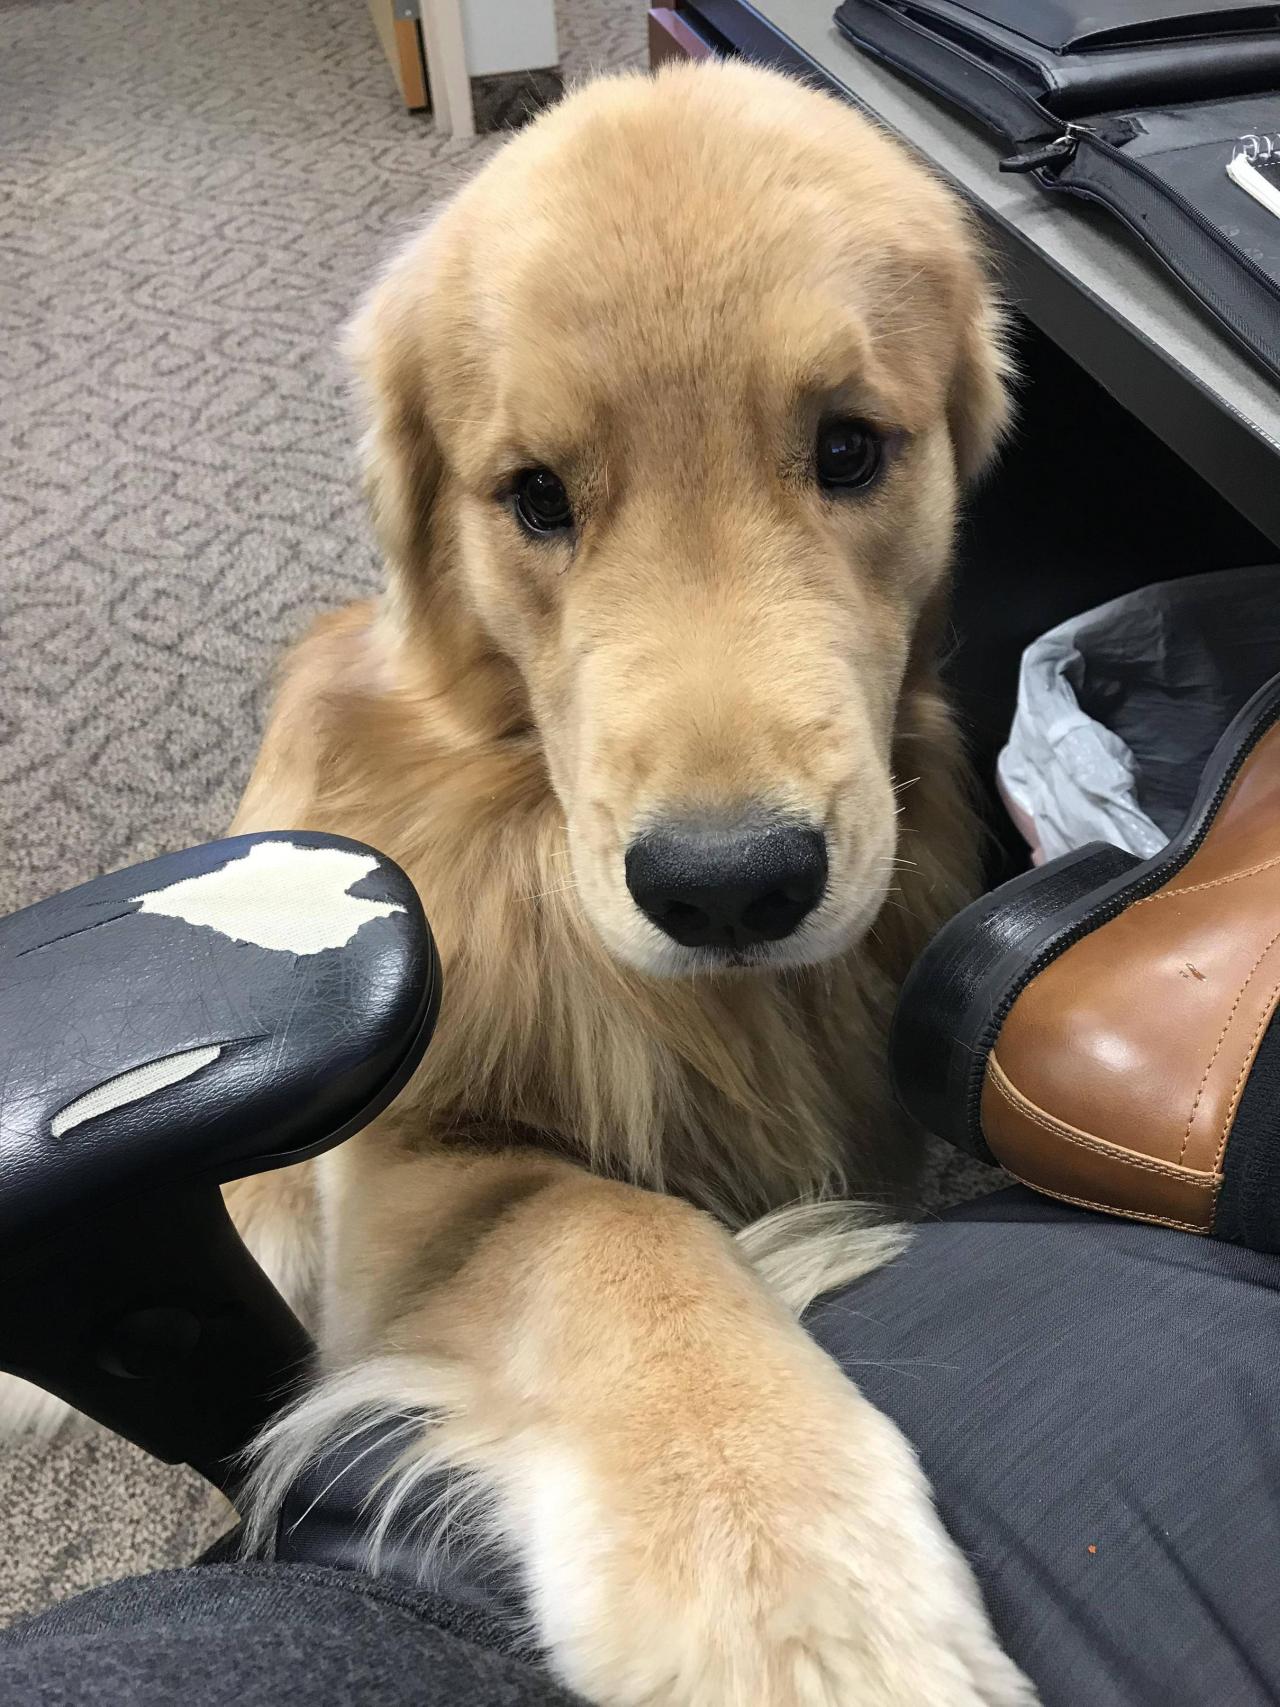 Everyone Needs an Office Dog.